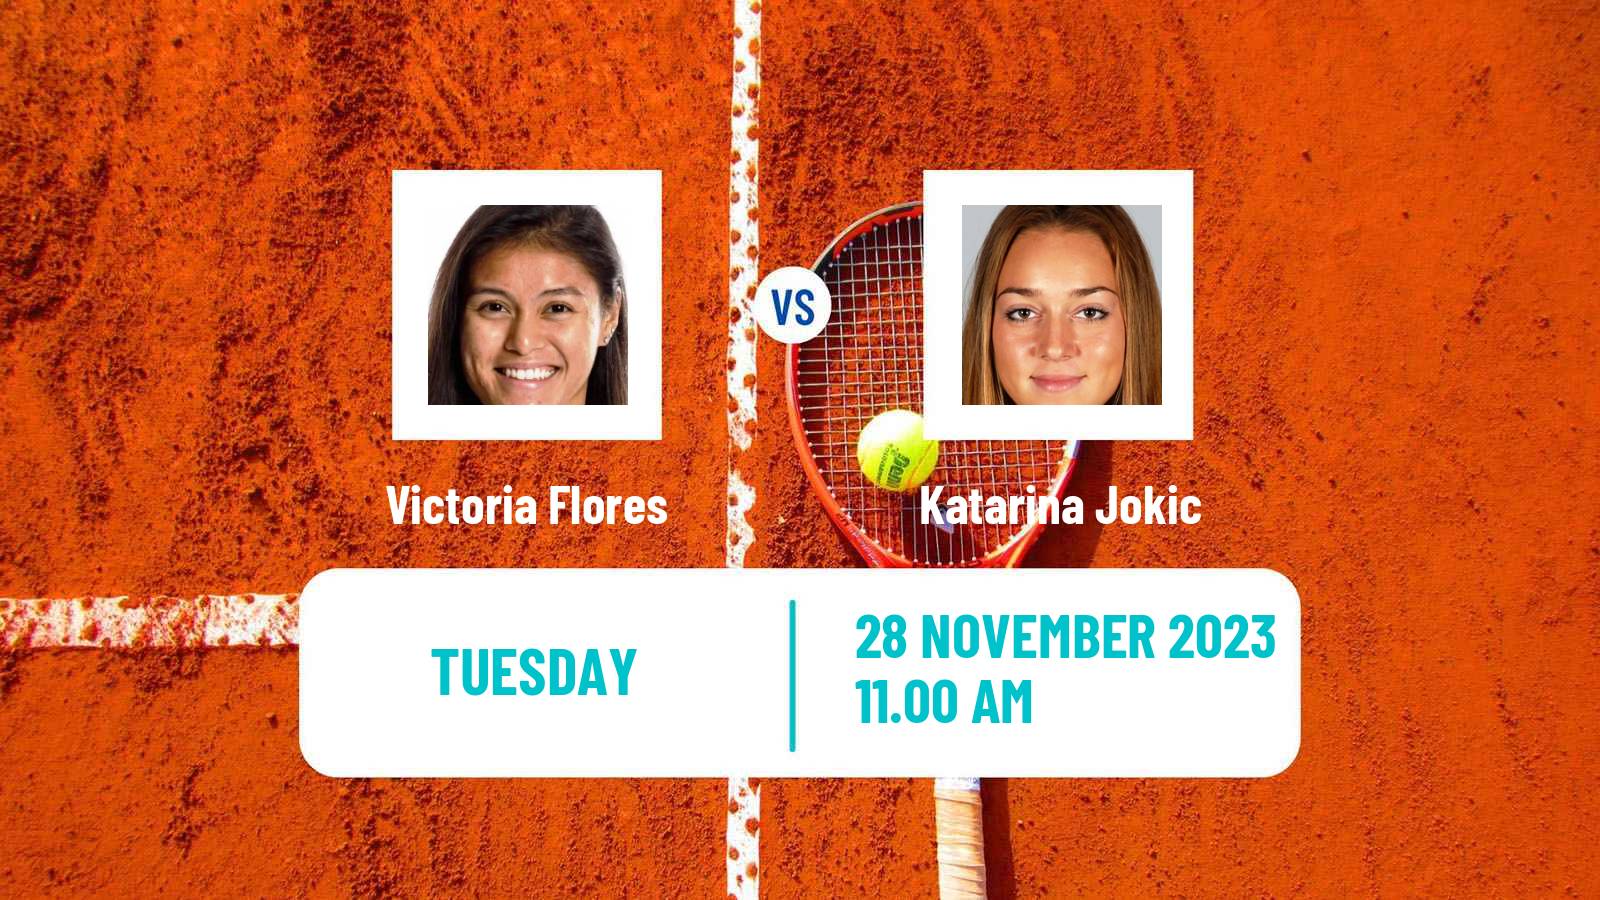 Tennis ITF W40 Veracruz Women Victoria Flores - Katarina Jokic